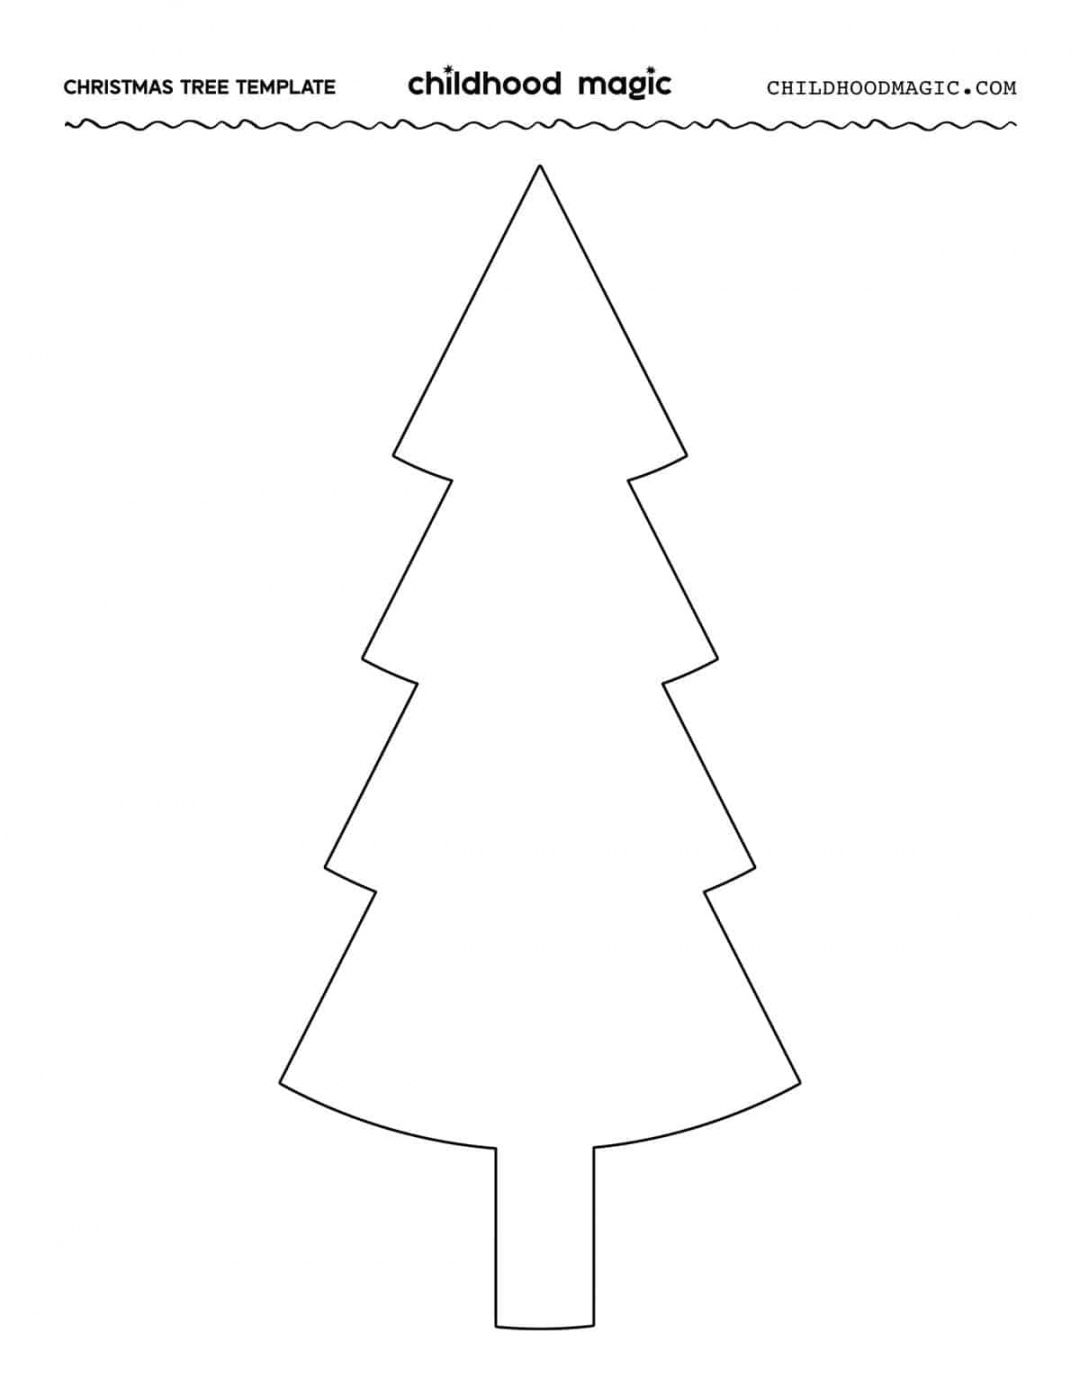 Christmas Tree Template - Free Printables - Childhood Magic - FREE Printables - Christmas Tree Cutouts